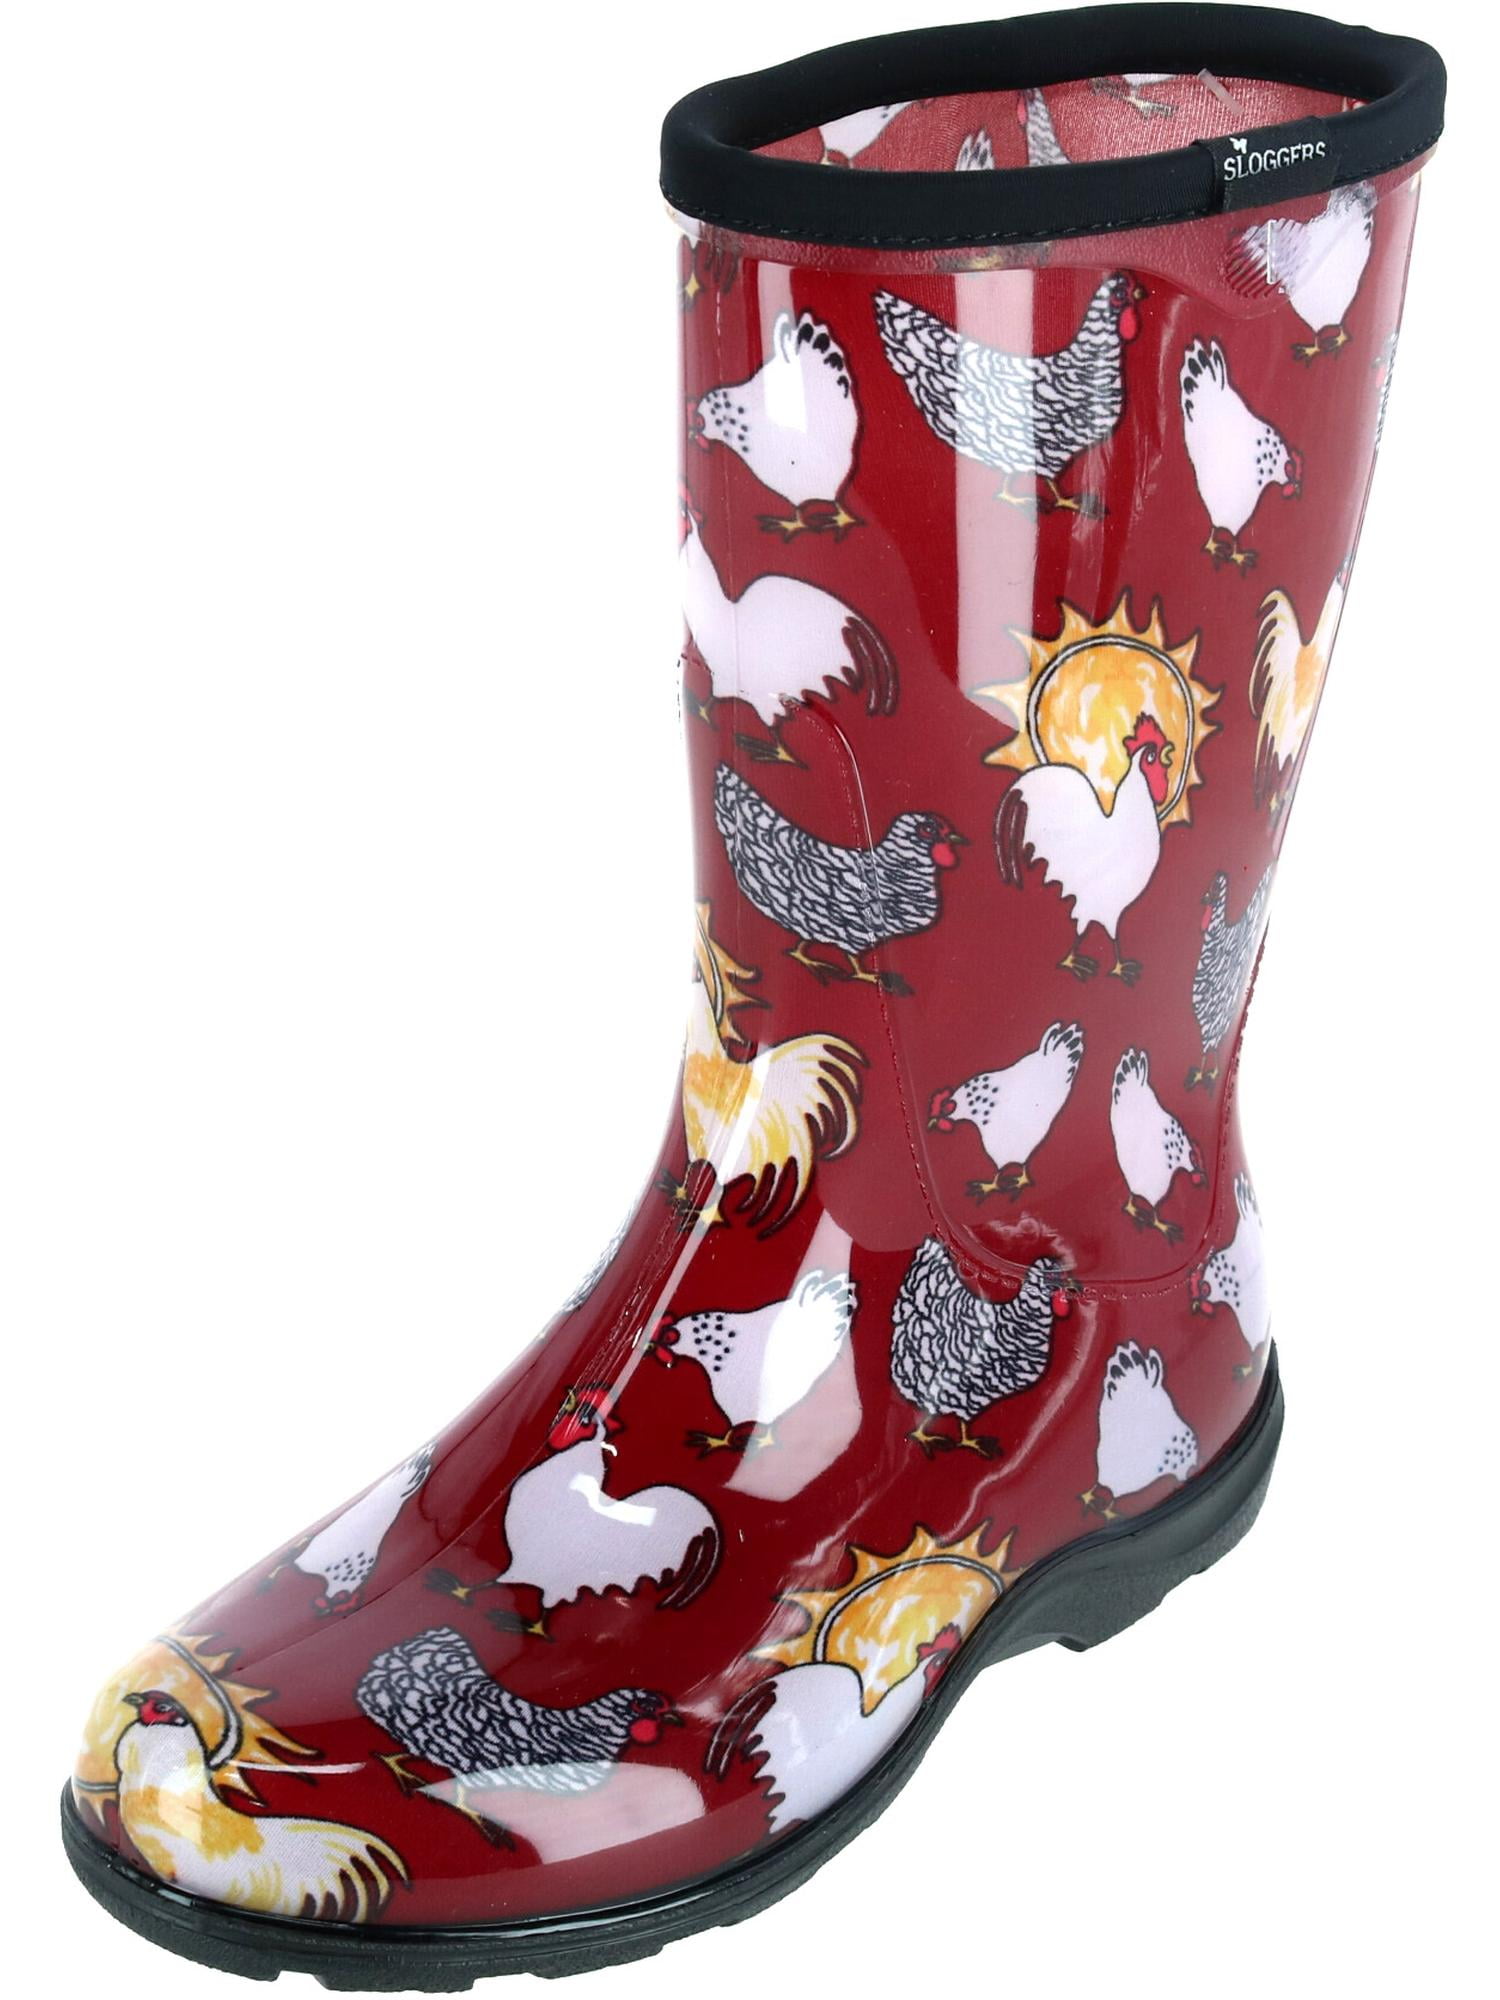 Sloggers Waterproof Garden Rain Boots for Women - Cute Mid-Calf Mud ...